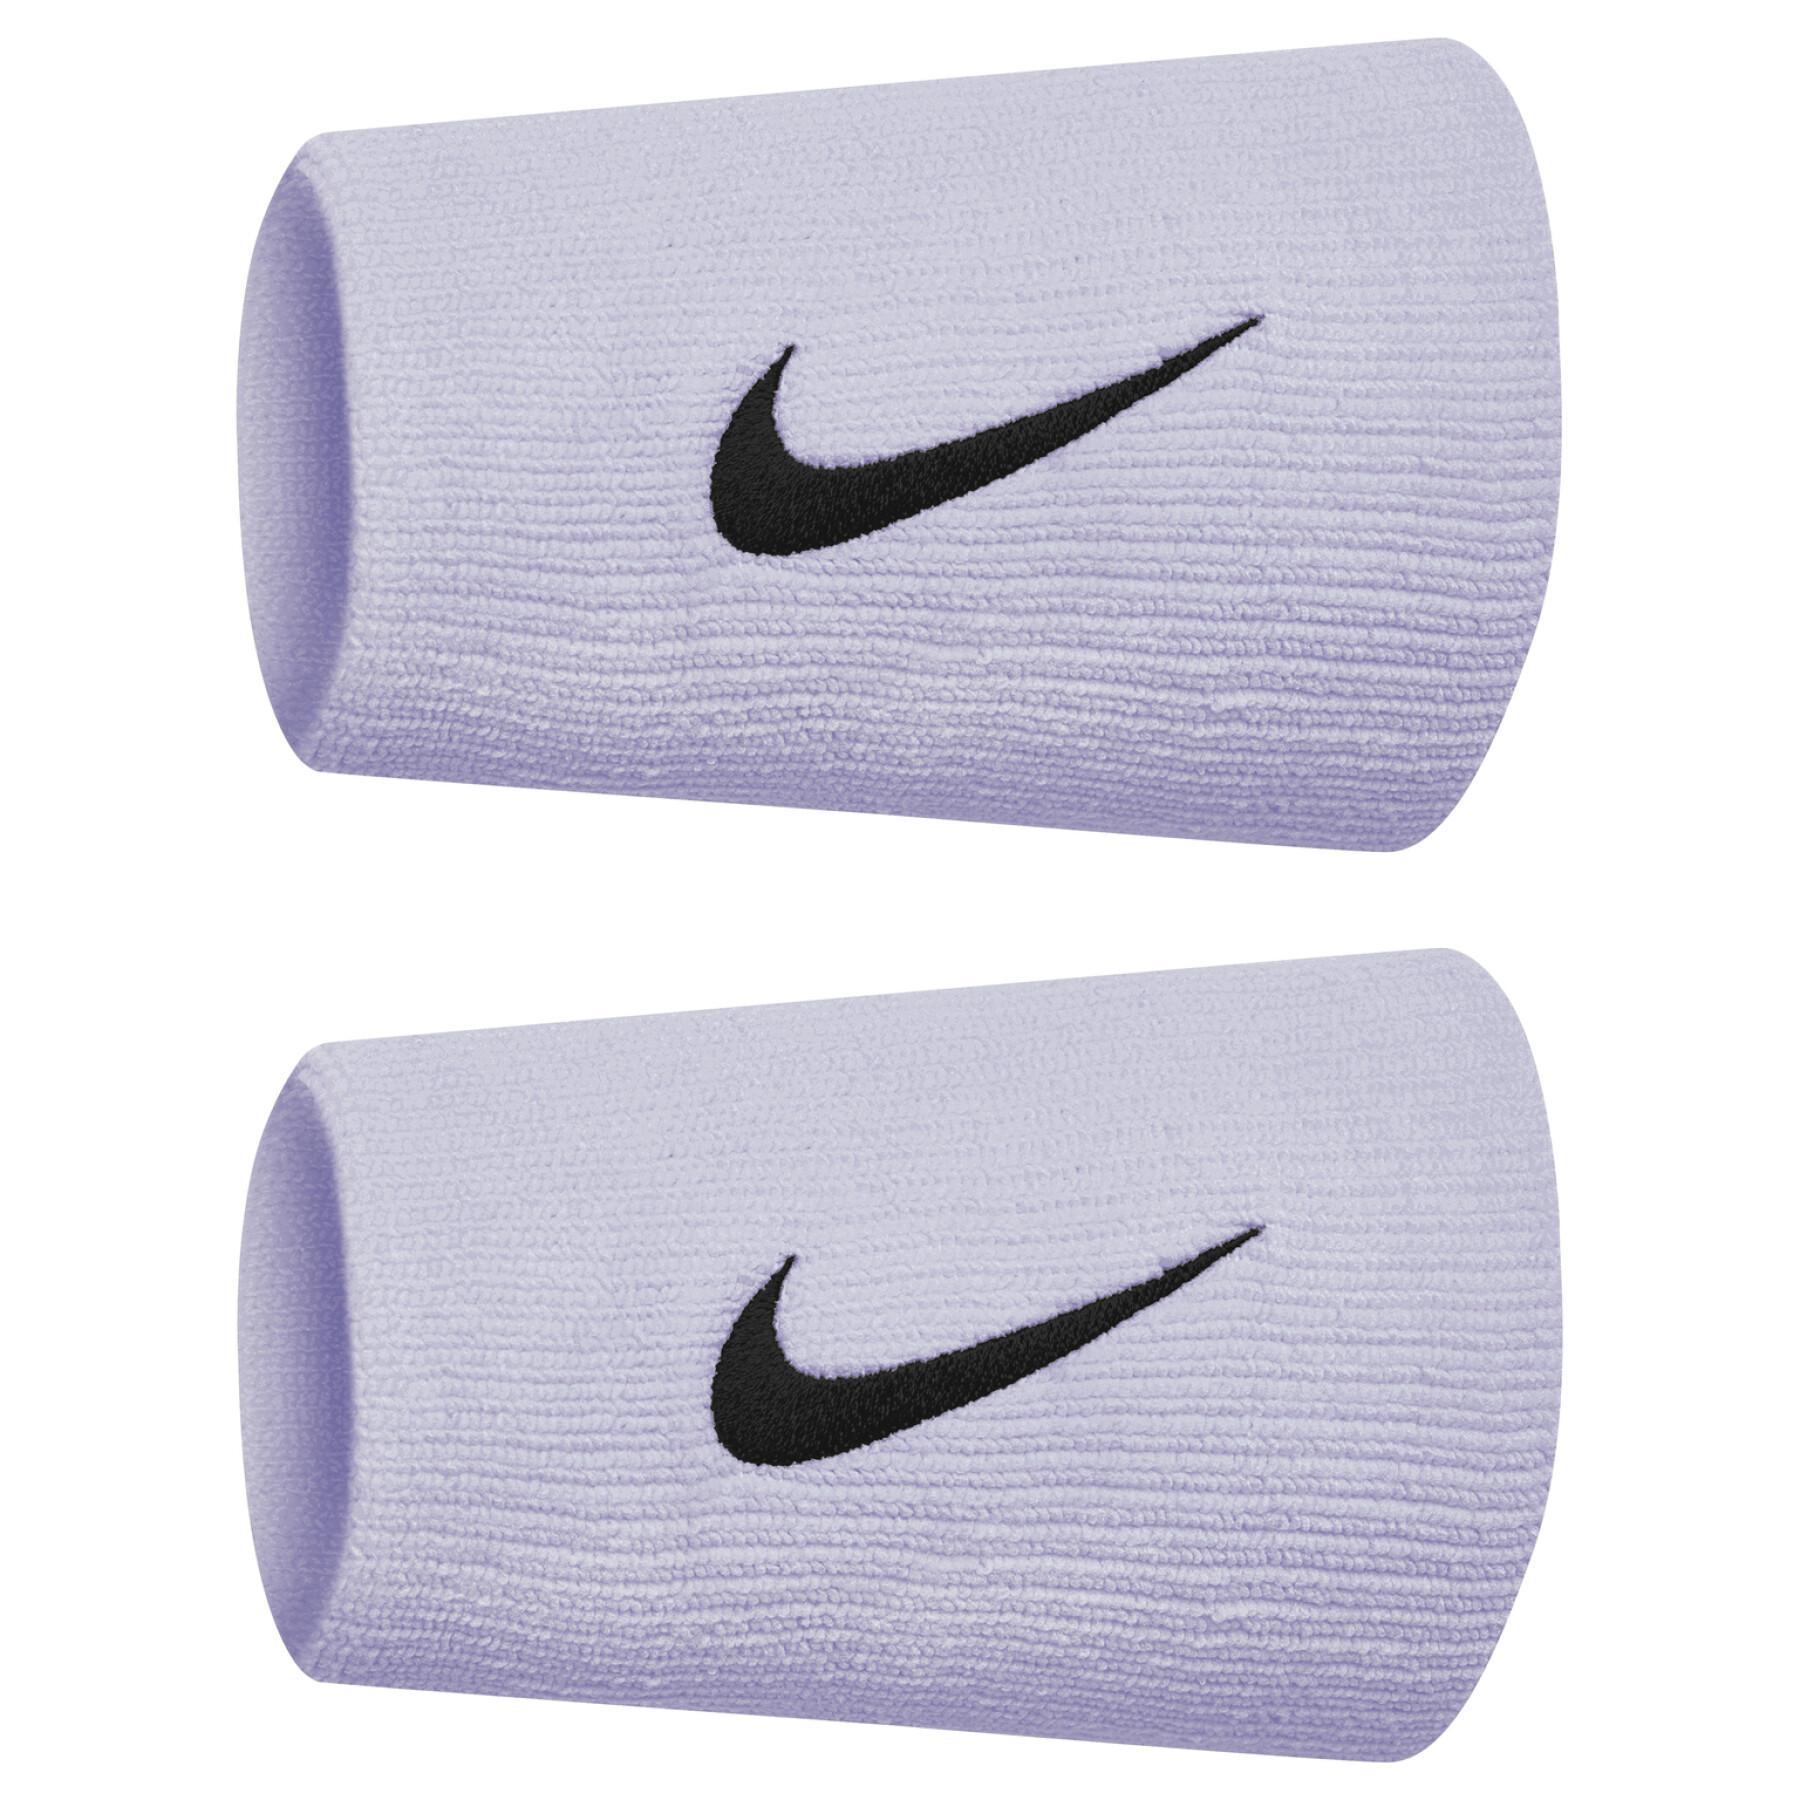 Brede dubbele tennisspons polsband Nike Premier 2 PK